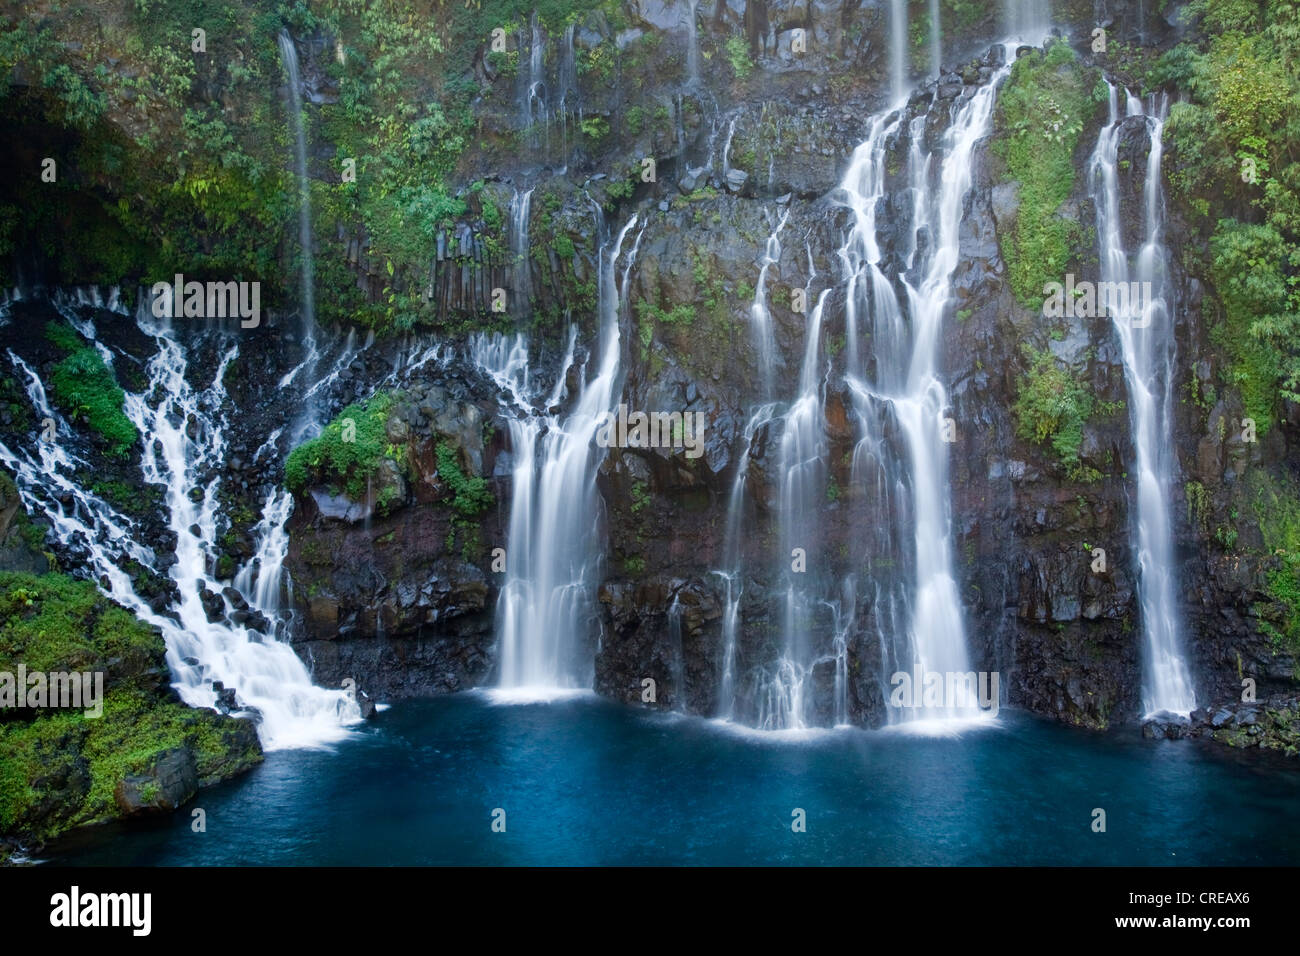 Cascade de la Grand Ravine waterfalls at Grand Galet, Reunion island, Indian Ocean Stock Photo